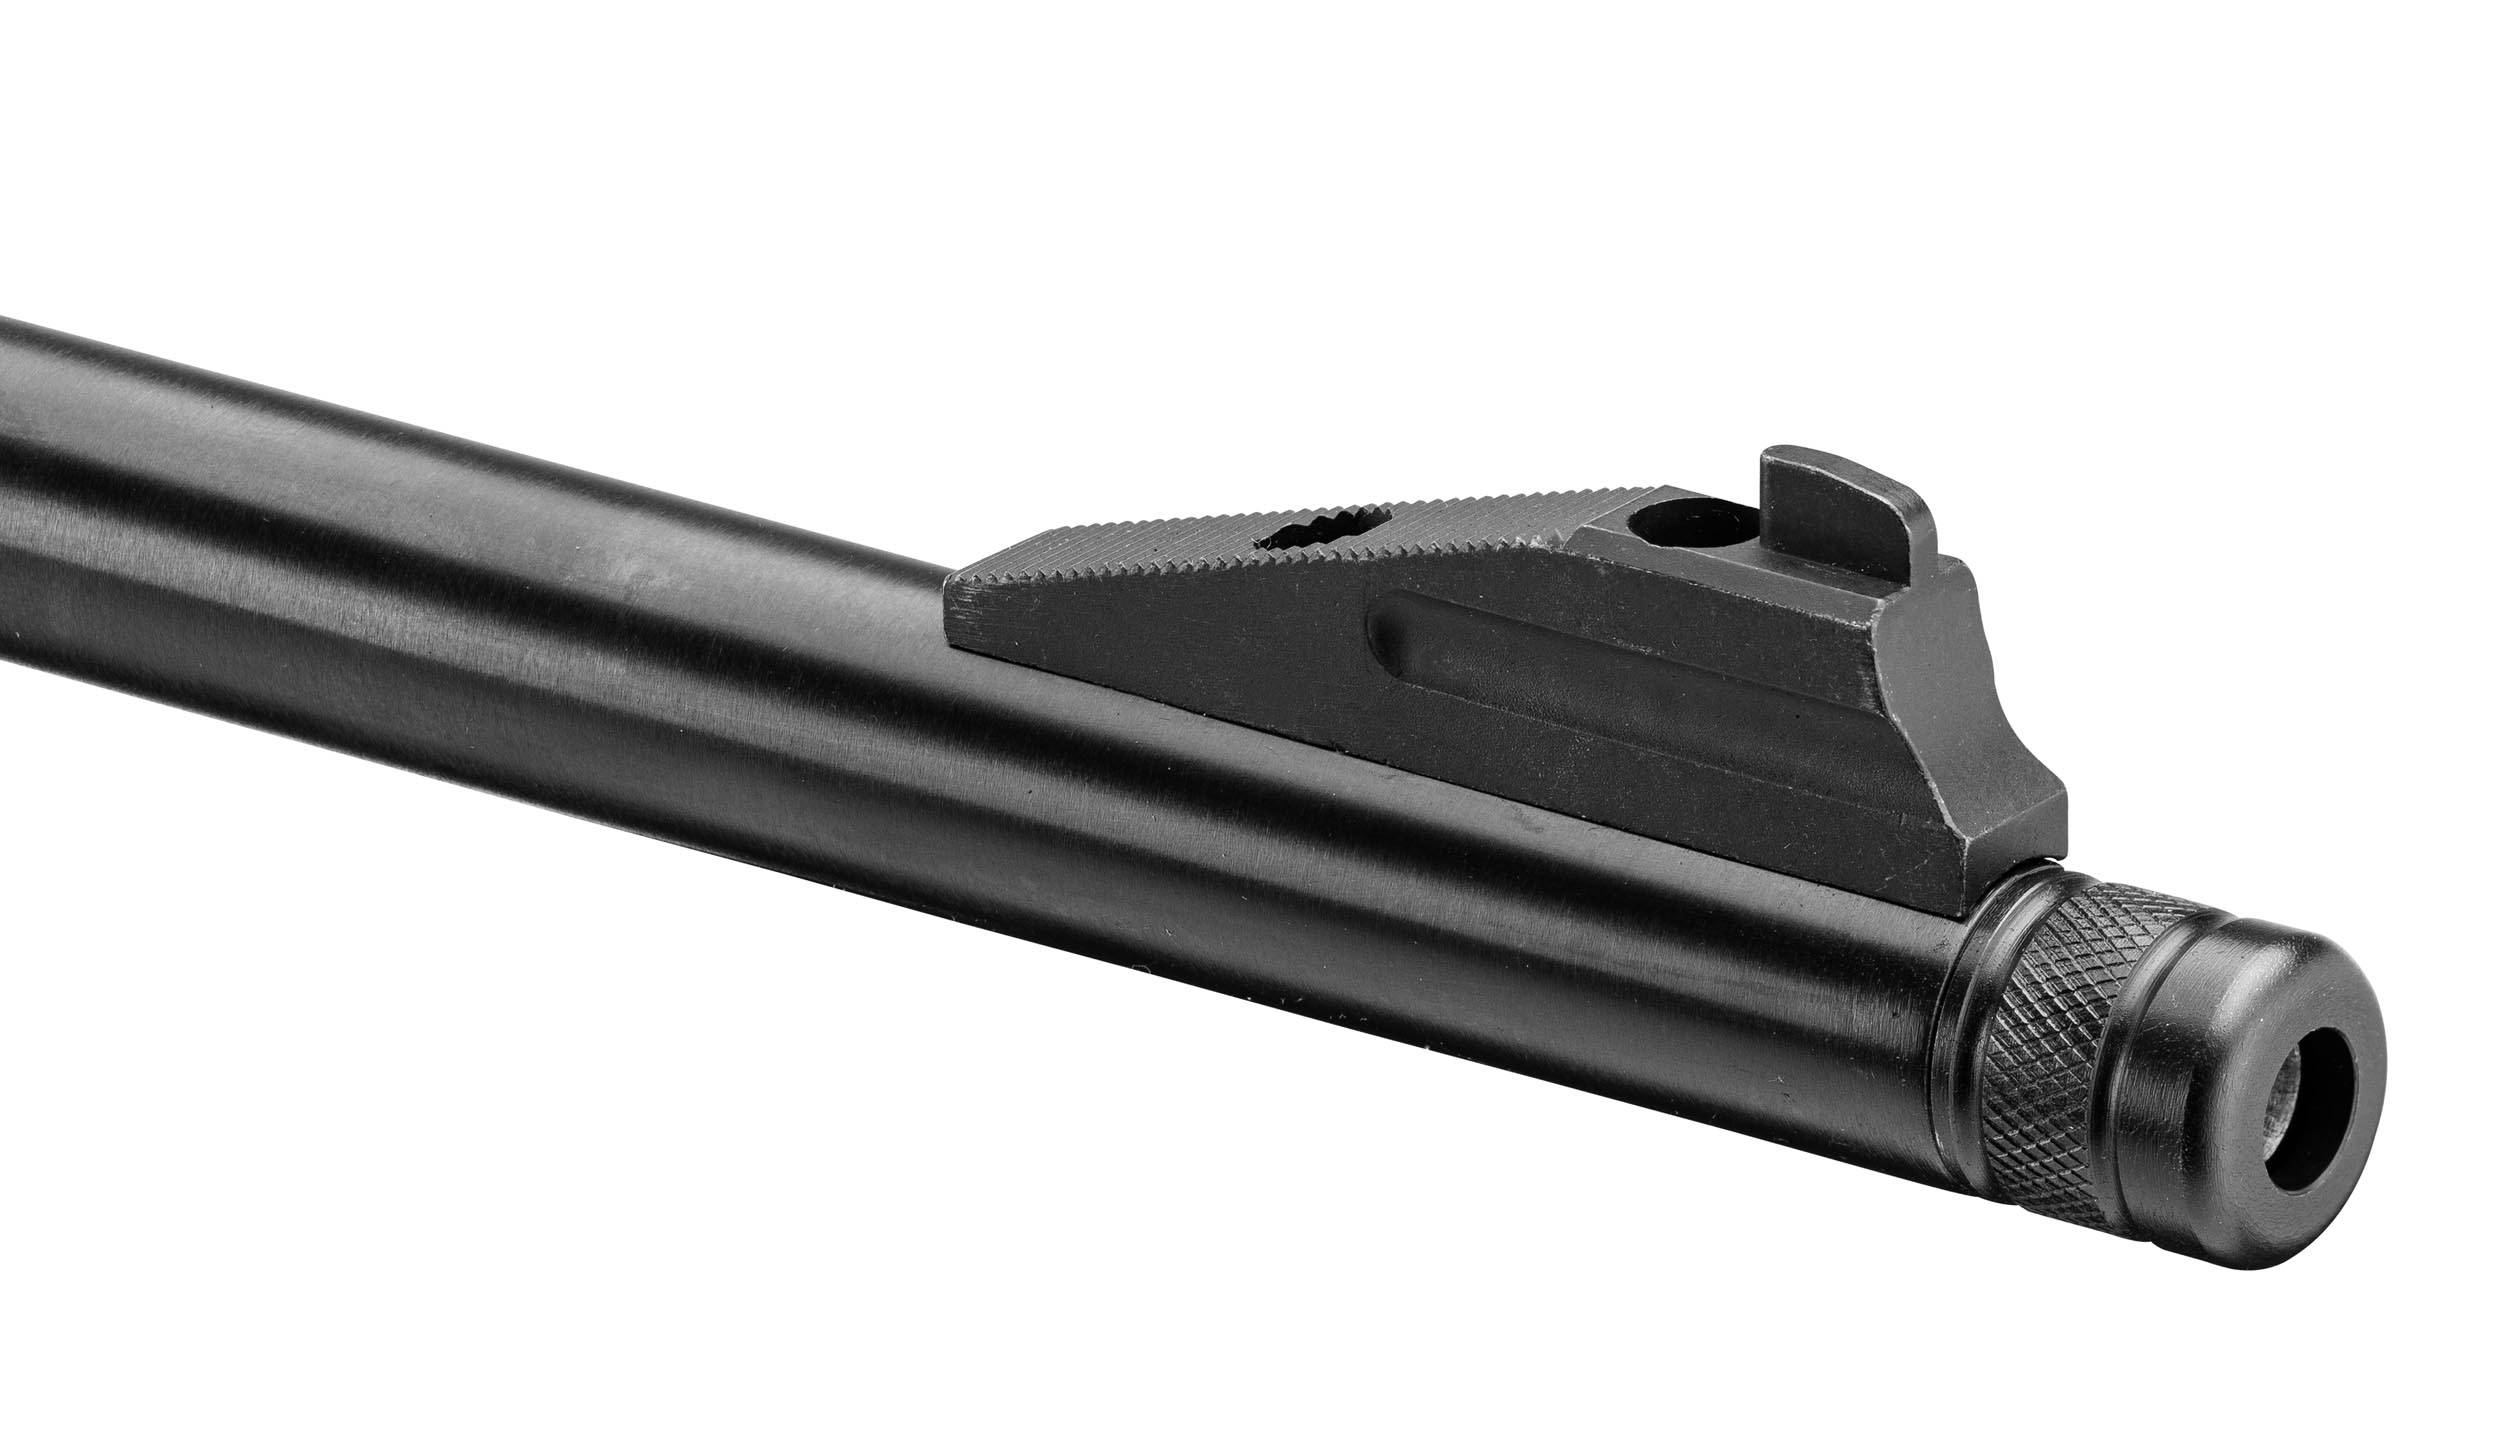 Pack carabine BO Manufacture Loisir cal. 22 LR. Carabine 22LR BO  manufacture - Black Ops Manufacture Equality Maker, Thumbhole Synthétique  en Pack-Armurerie, vente d'arme calibre 22 Mossberg - Carabines de Tir  loisir